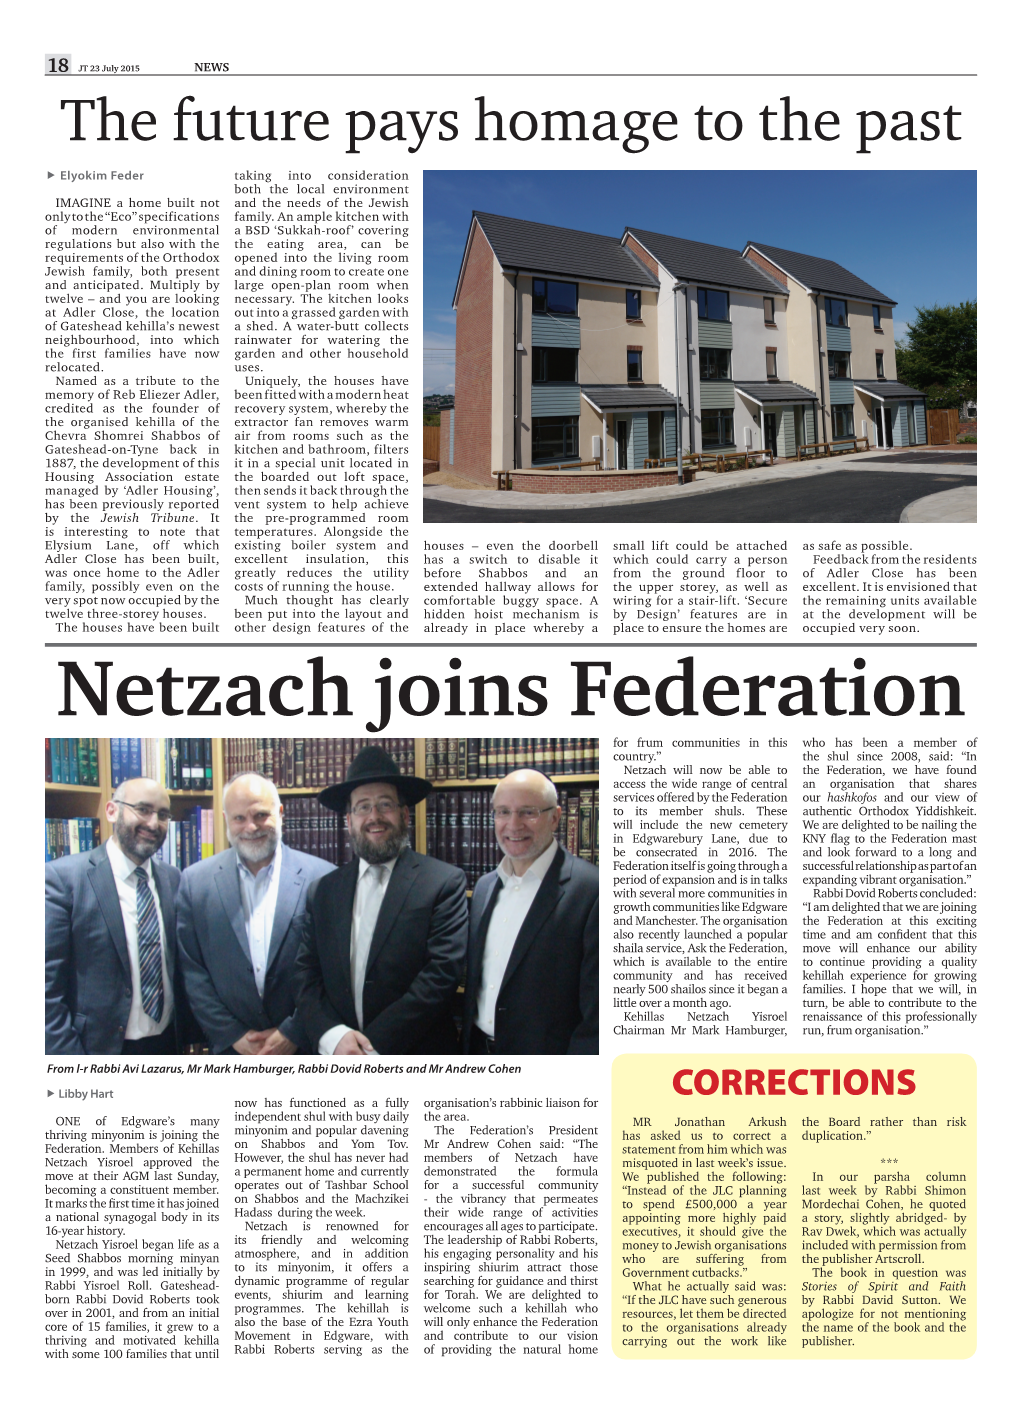 Netzach Joins Federation